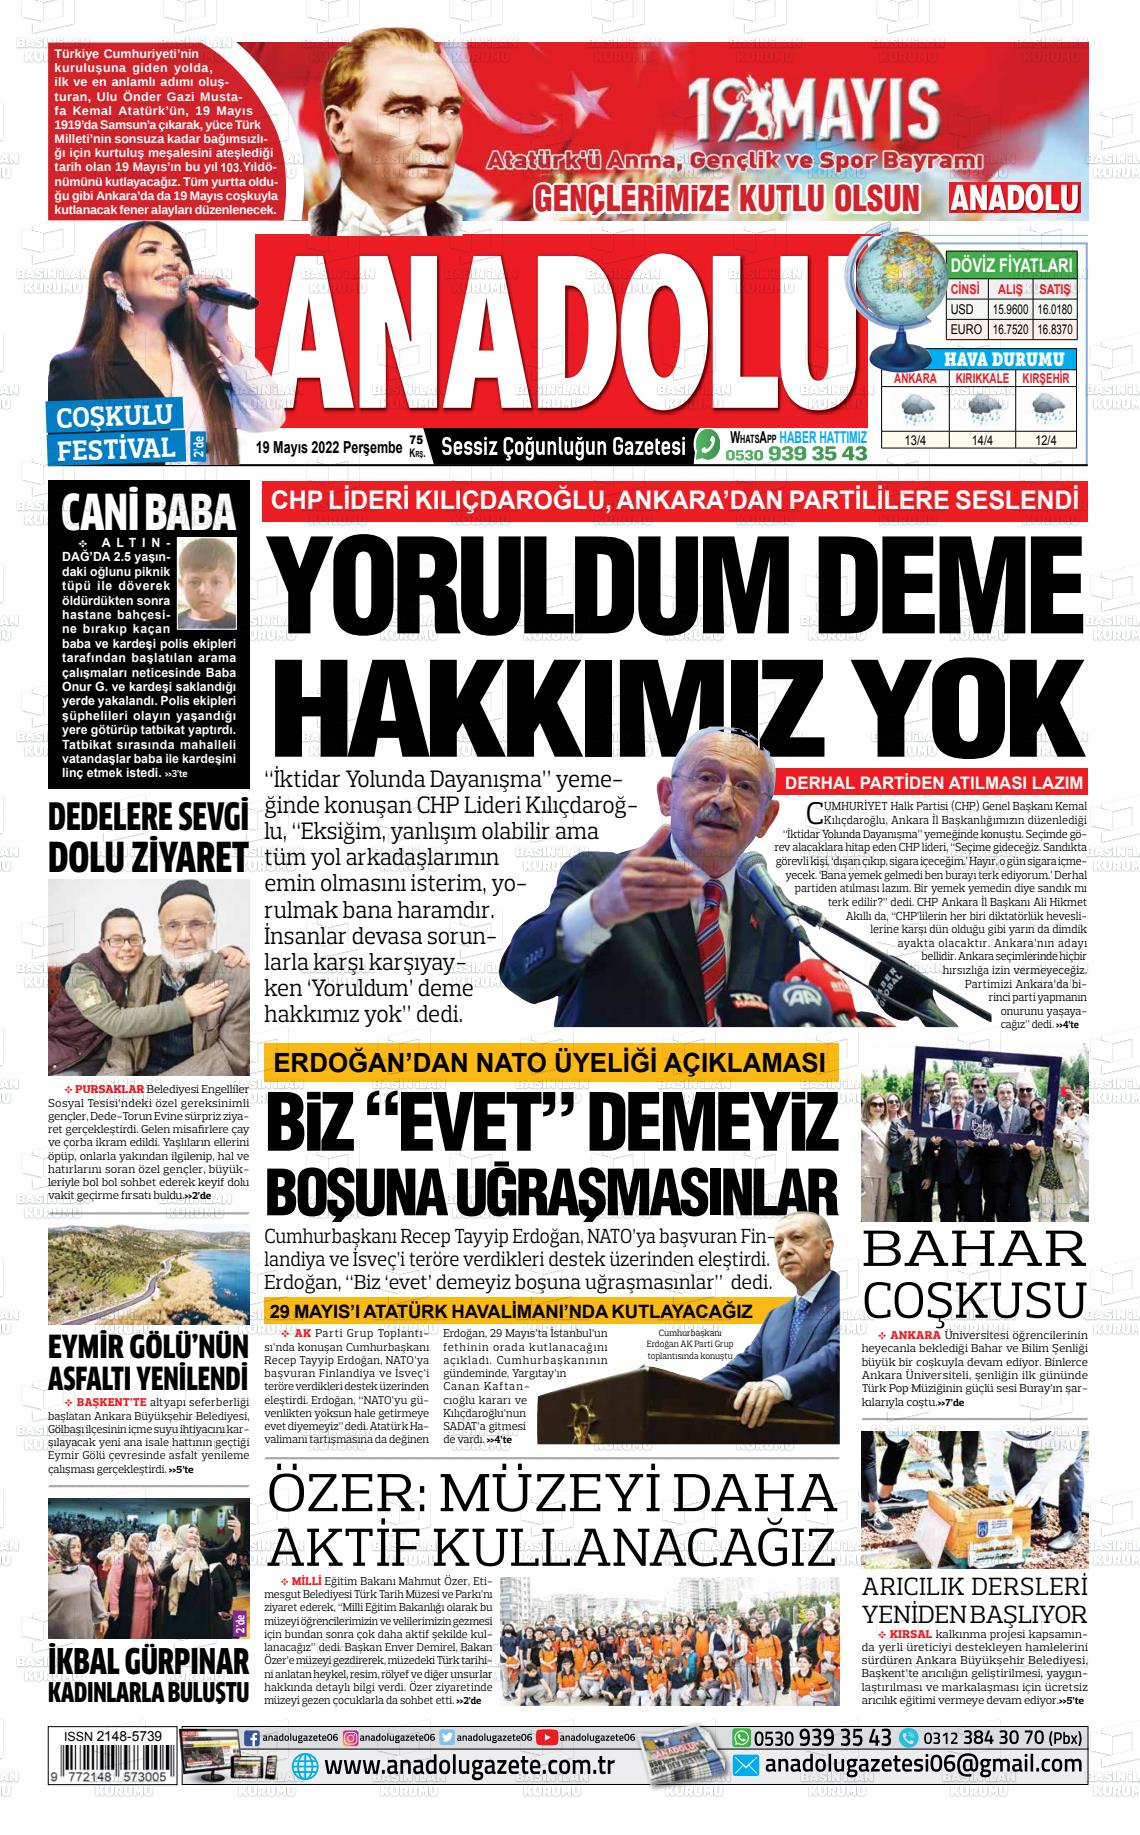 19 Mayıs 2022 Ankara Anadolu Gazete Manşeti